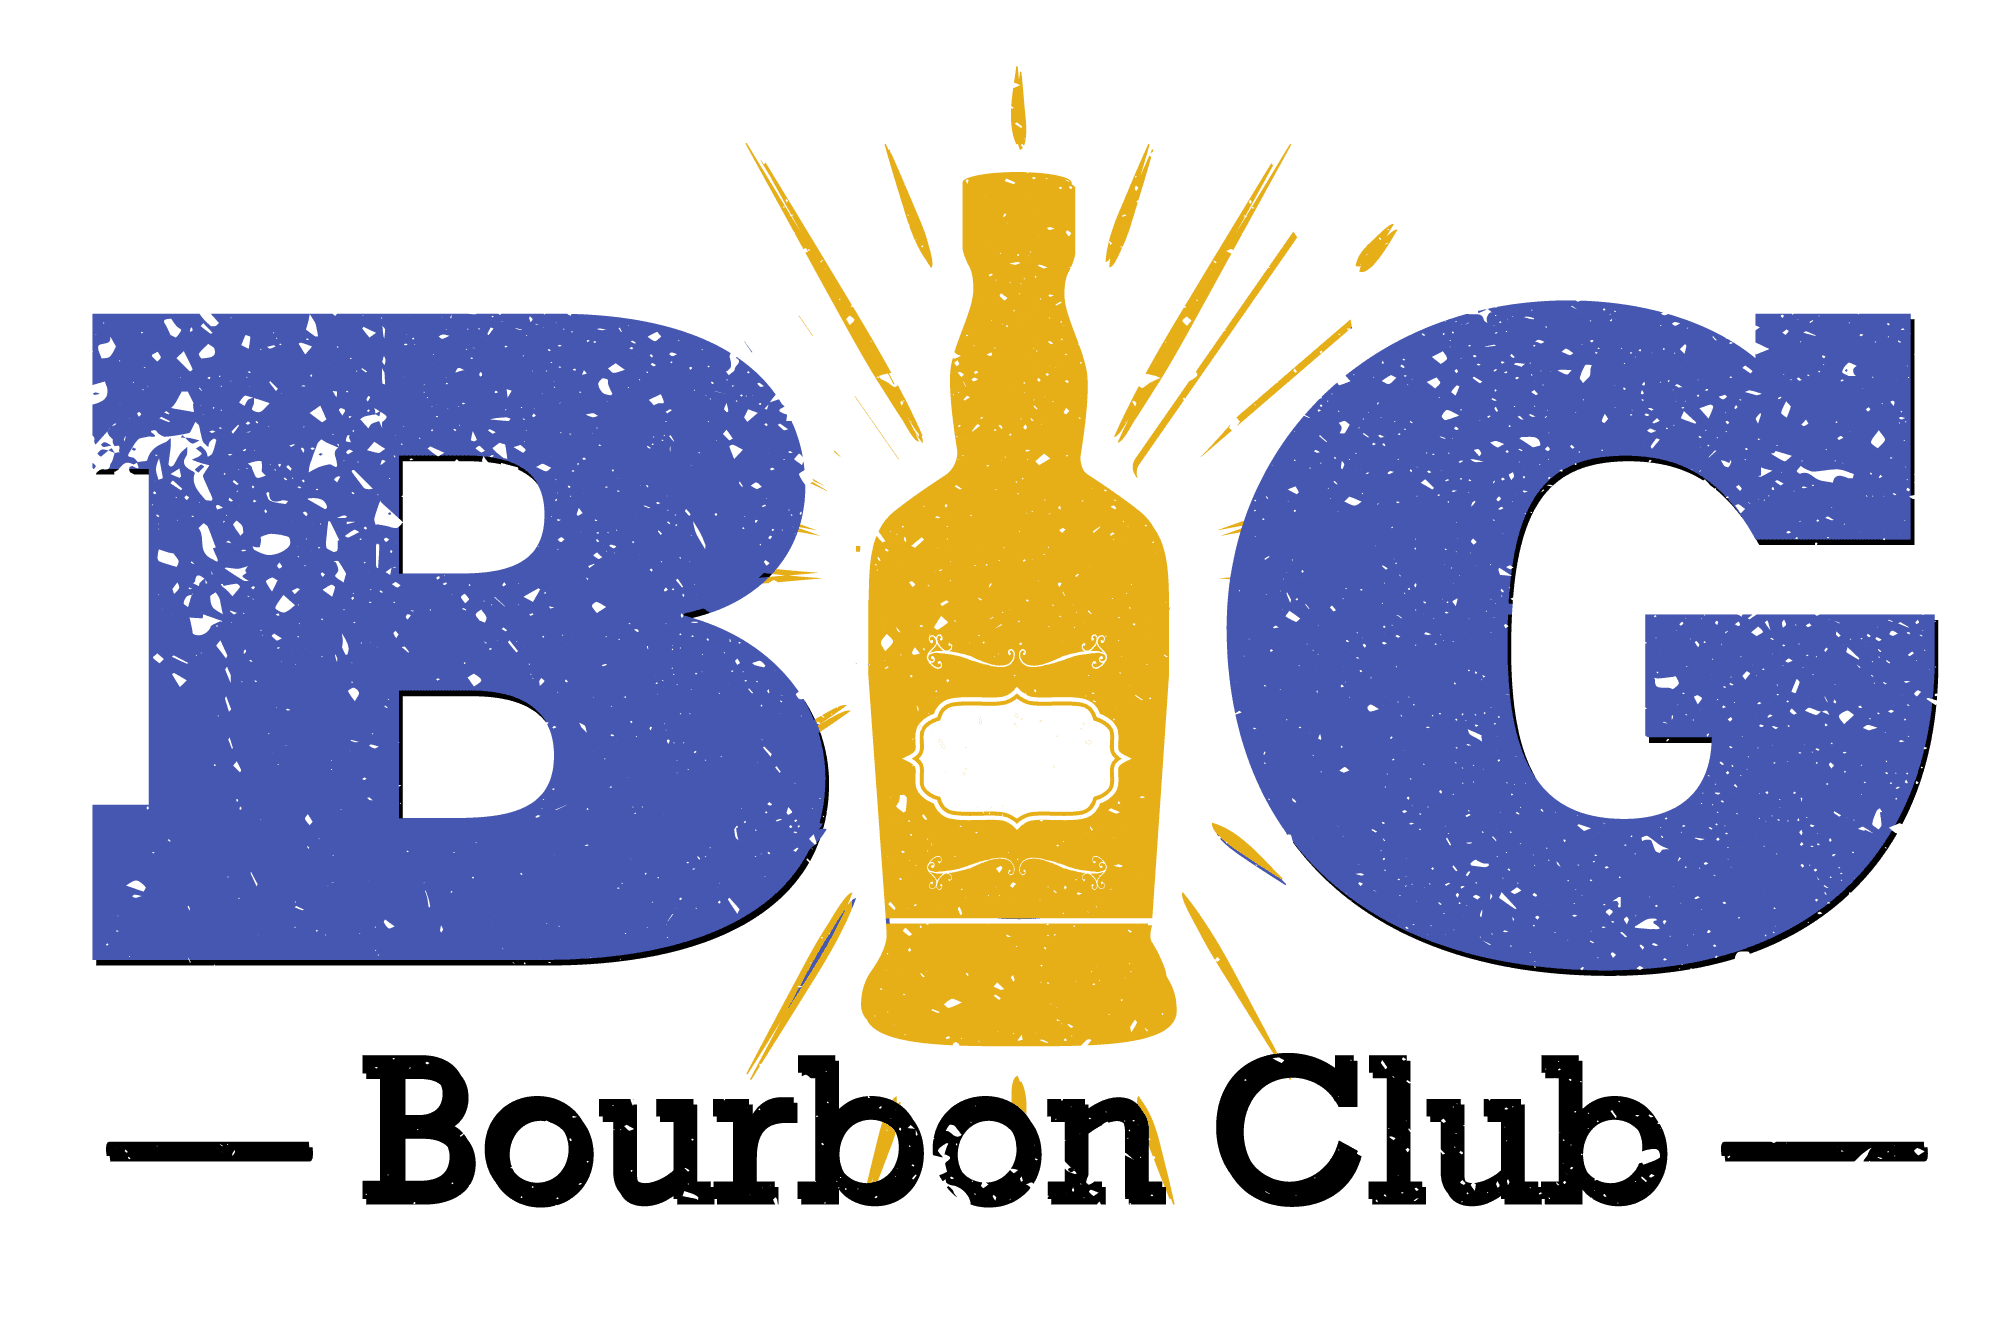 Big Bourbon Club